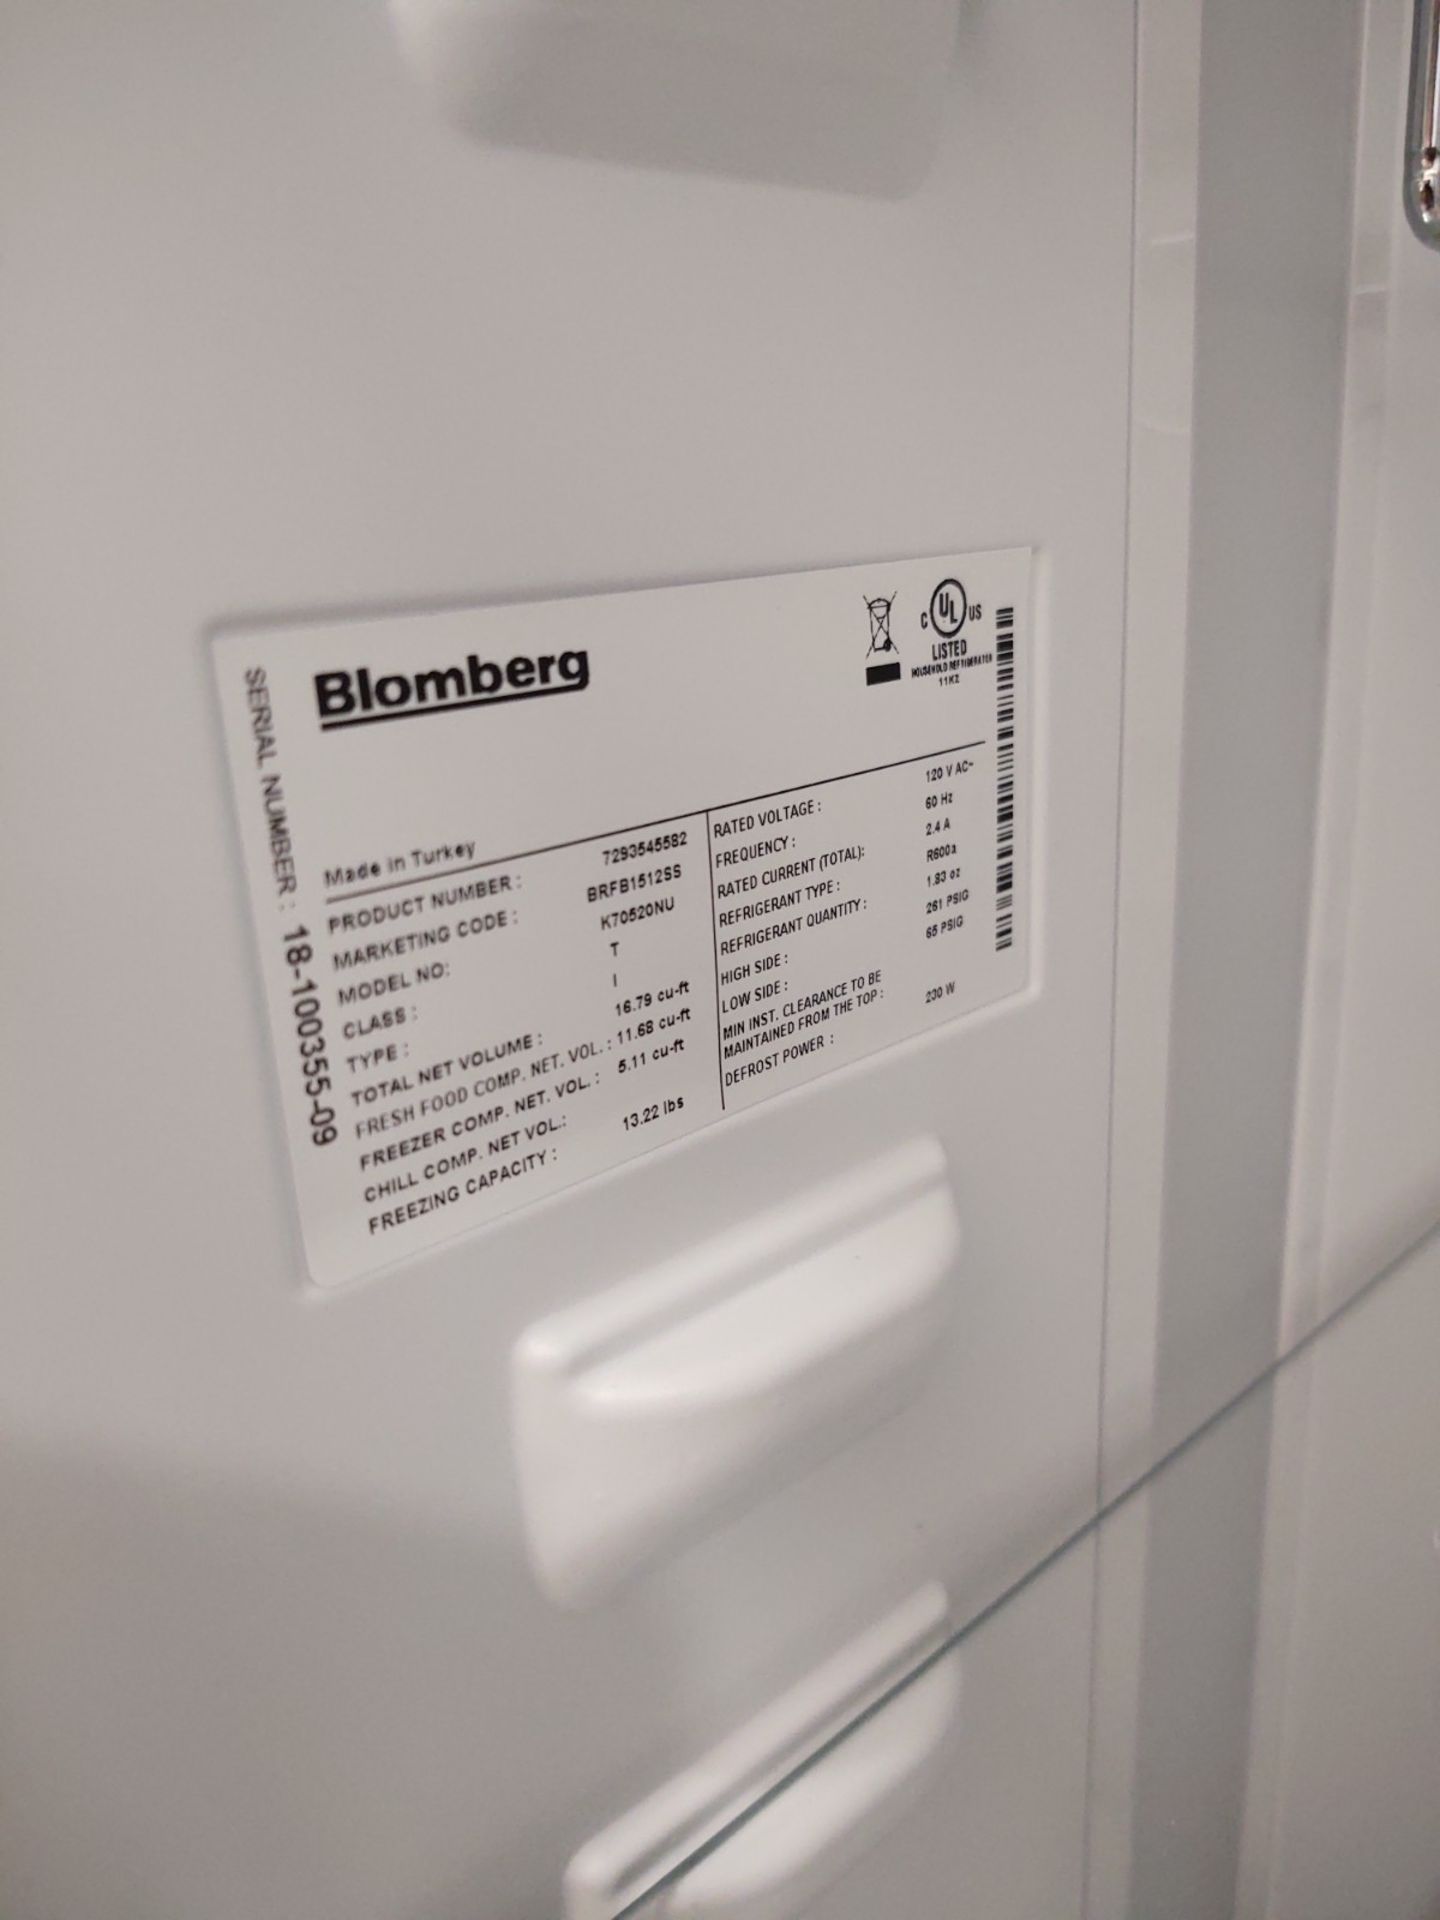 Blomberg Refrigerator Freezer #BRFB 15 Series, Model 7, 27"W Stainless Steel Finish, Bottom Freezer - Image 2 of 3